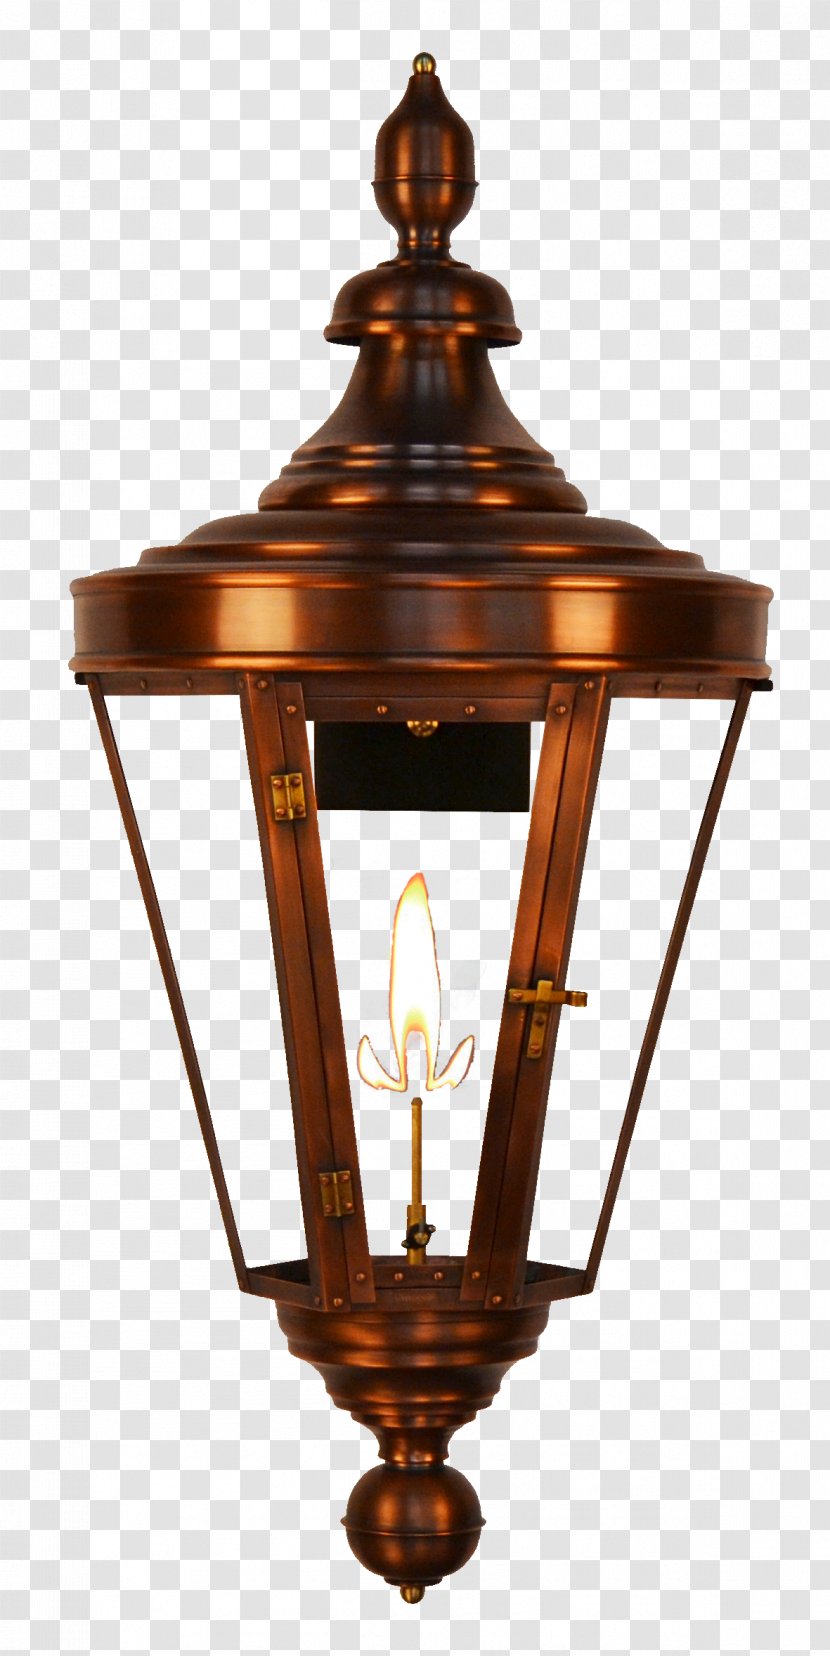 Royal Street, New Orleans Gas Lighting Lantern - Ceiling Fixture Transparent PNG